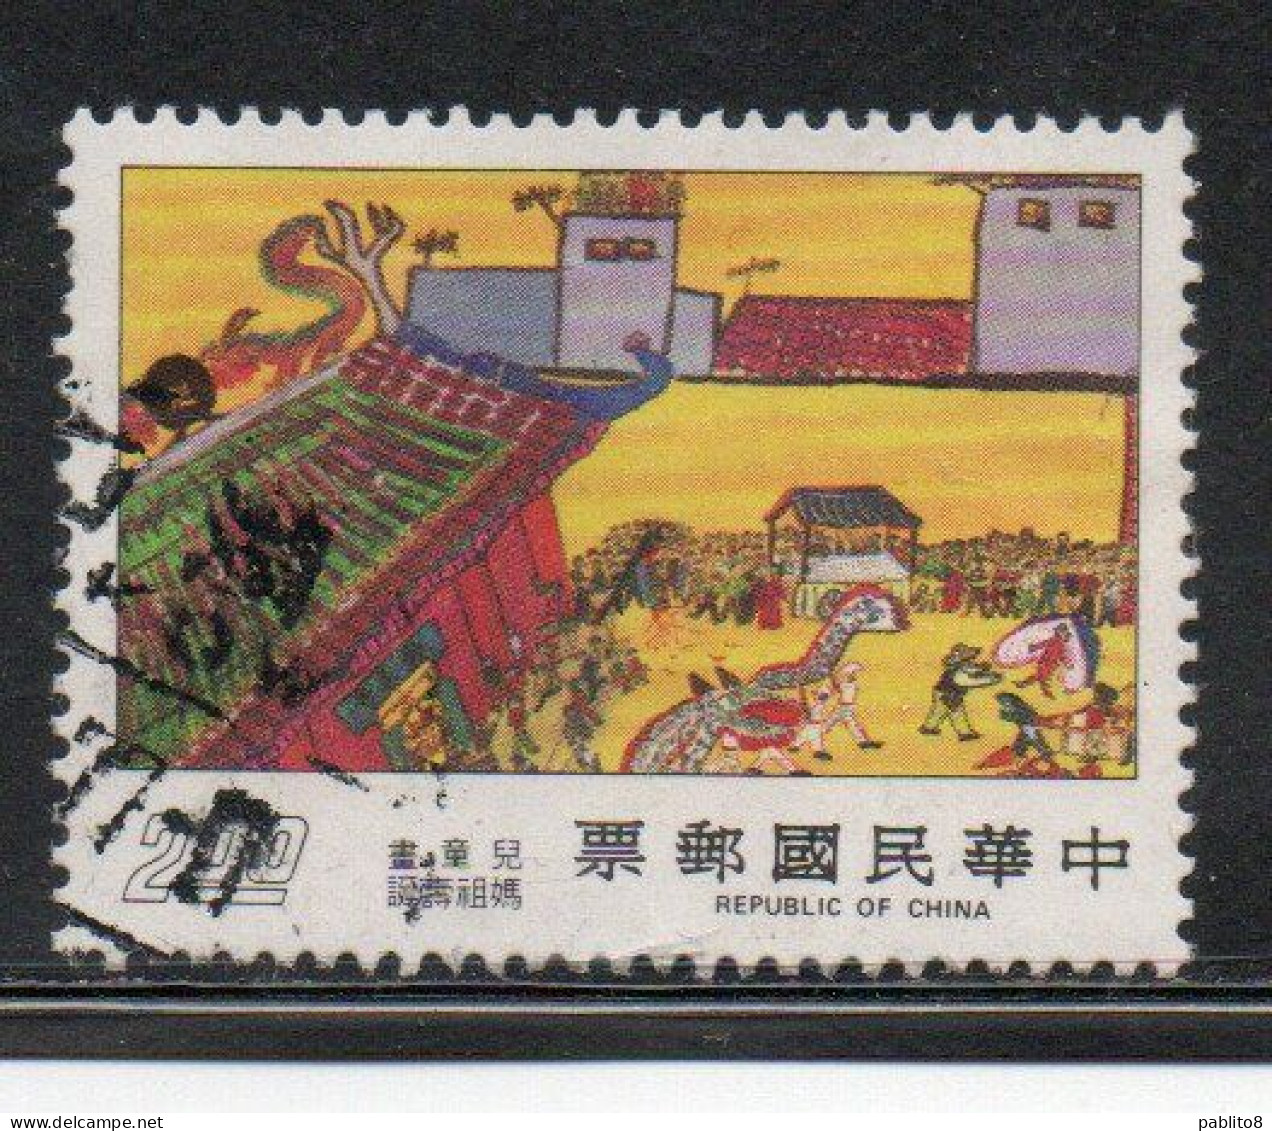 CHINA REPUBLIC CINA TAIWAN FORMOSA 1977 CHILDREN'S DRAWINGS SEA GODDESS FESTIVAL 2$ USED USATO OBLITERE' - Gebraucht